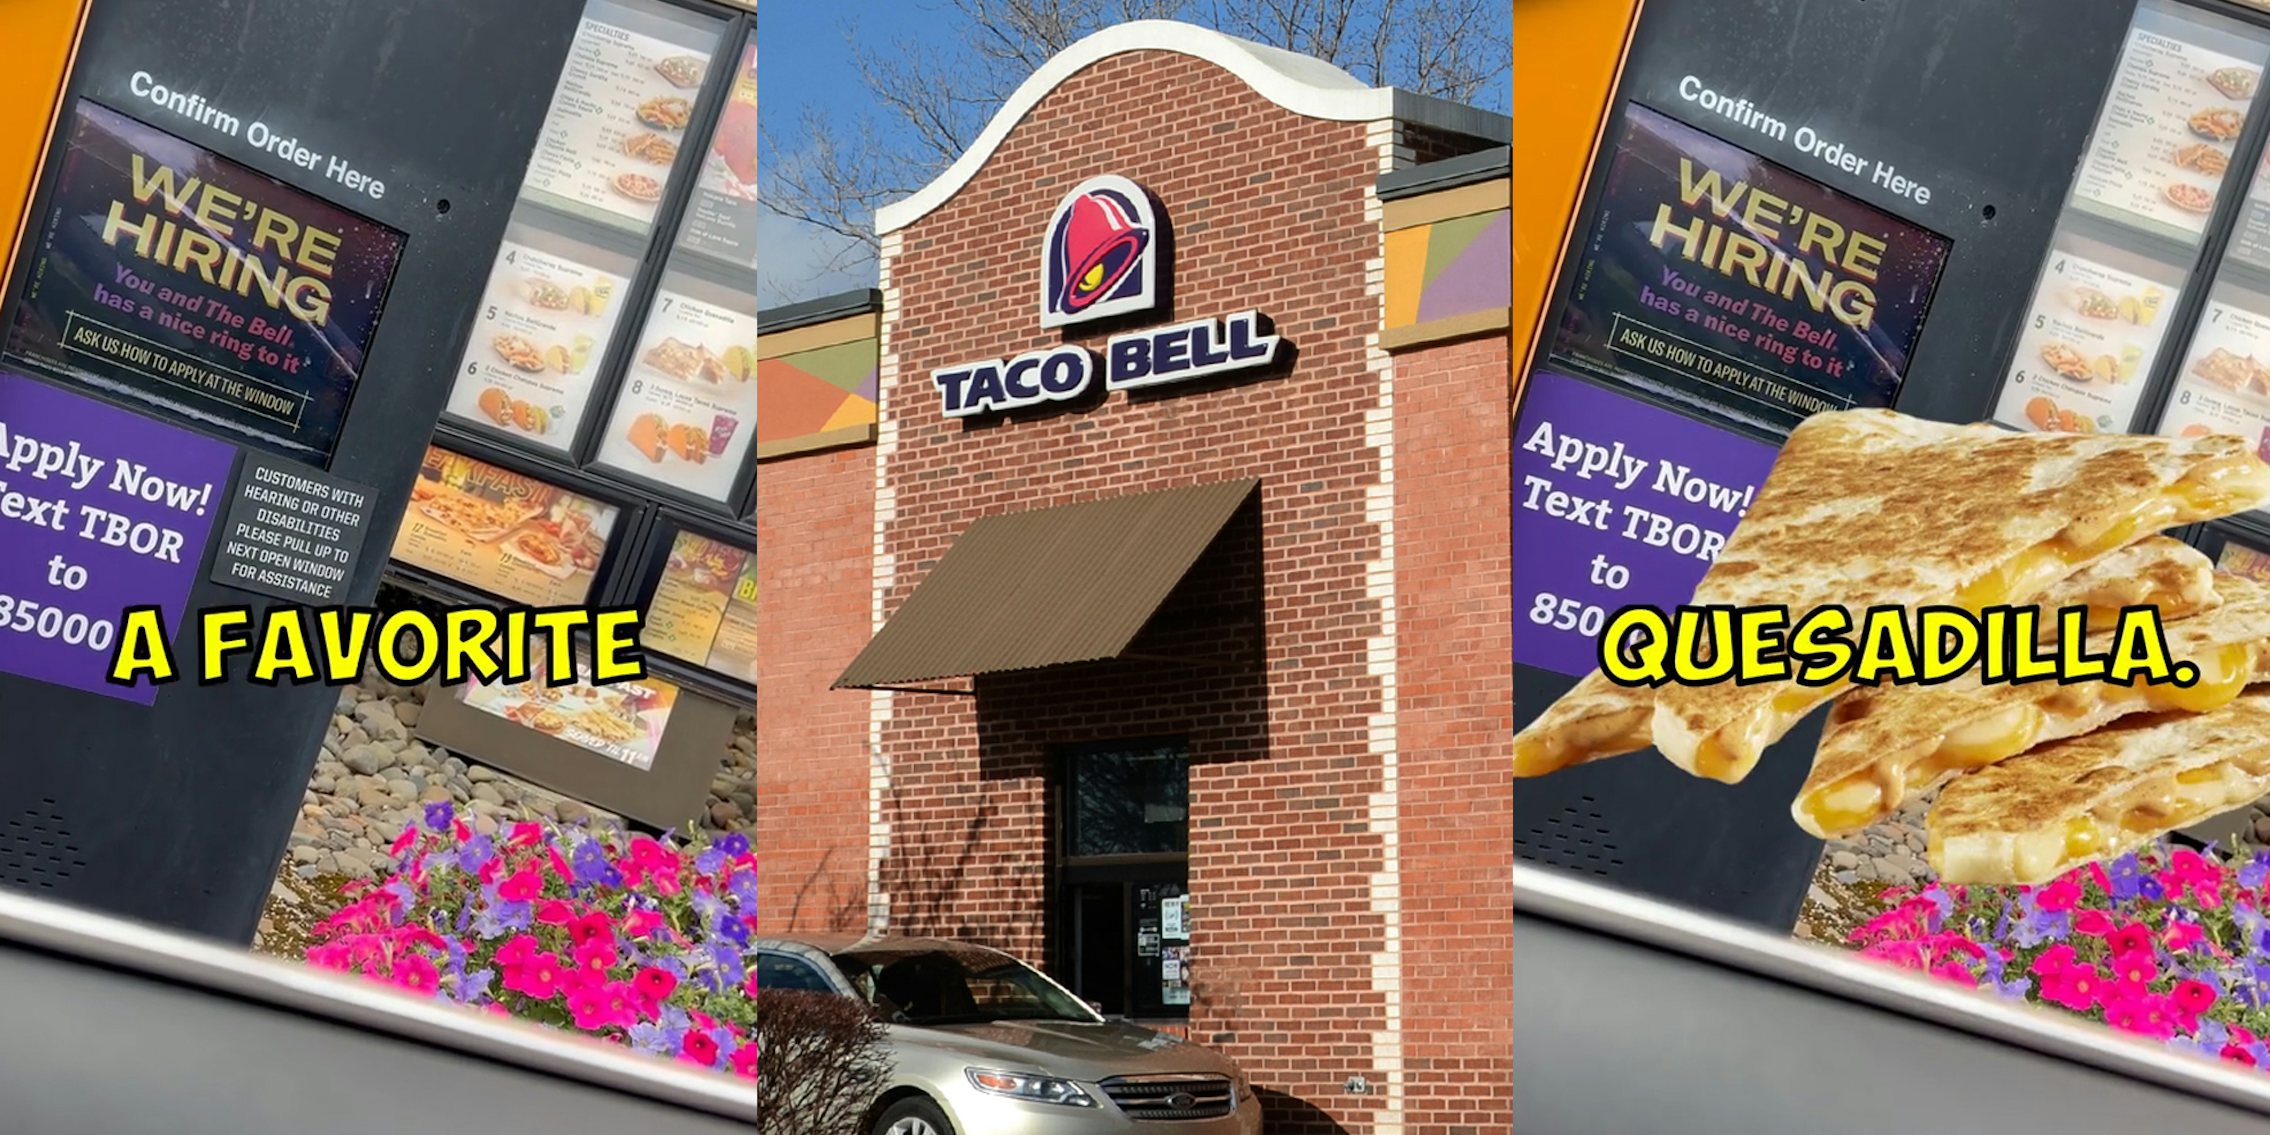 Taco bell drive thru menu with caption 'A FAVORITE' (l) Taco Bell drive thru window with sign (c) Taco bell drive thru menu with caption 'QUESADILLA.' (r)